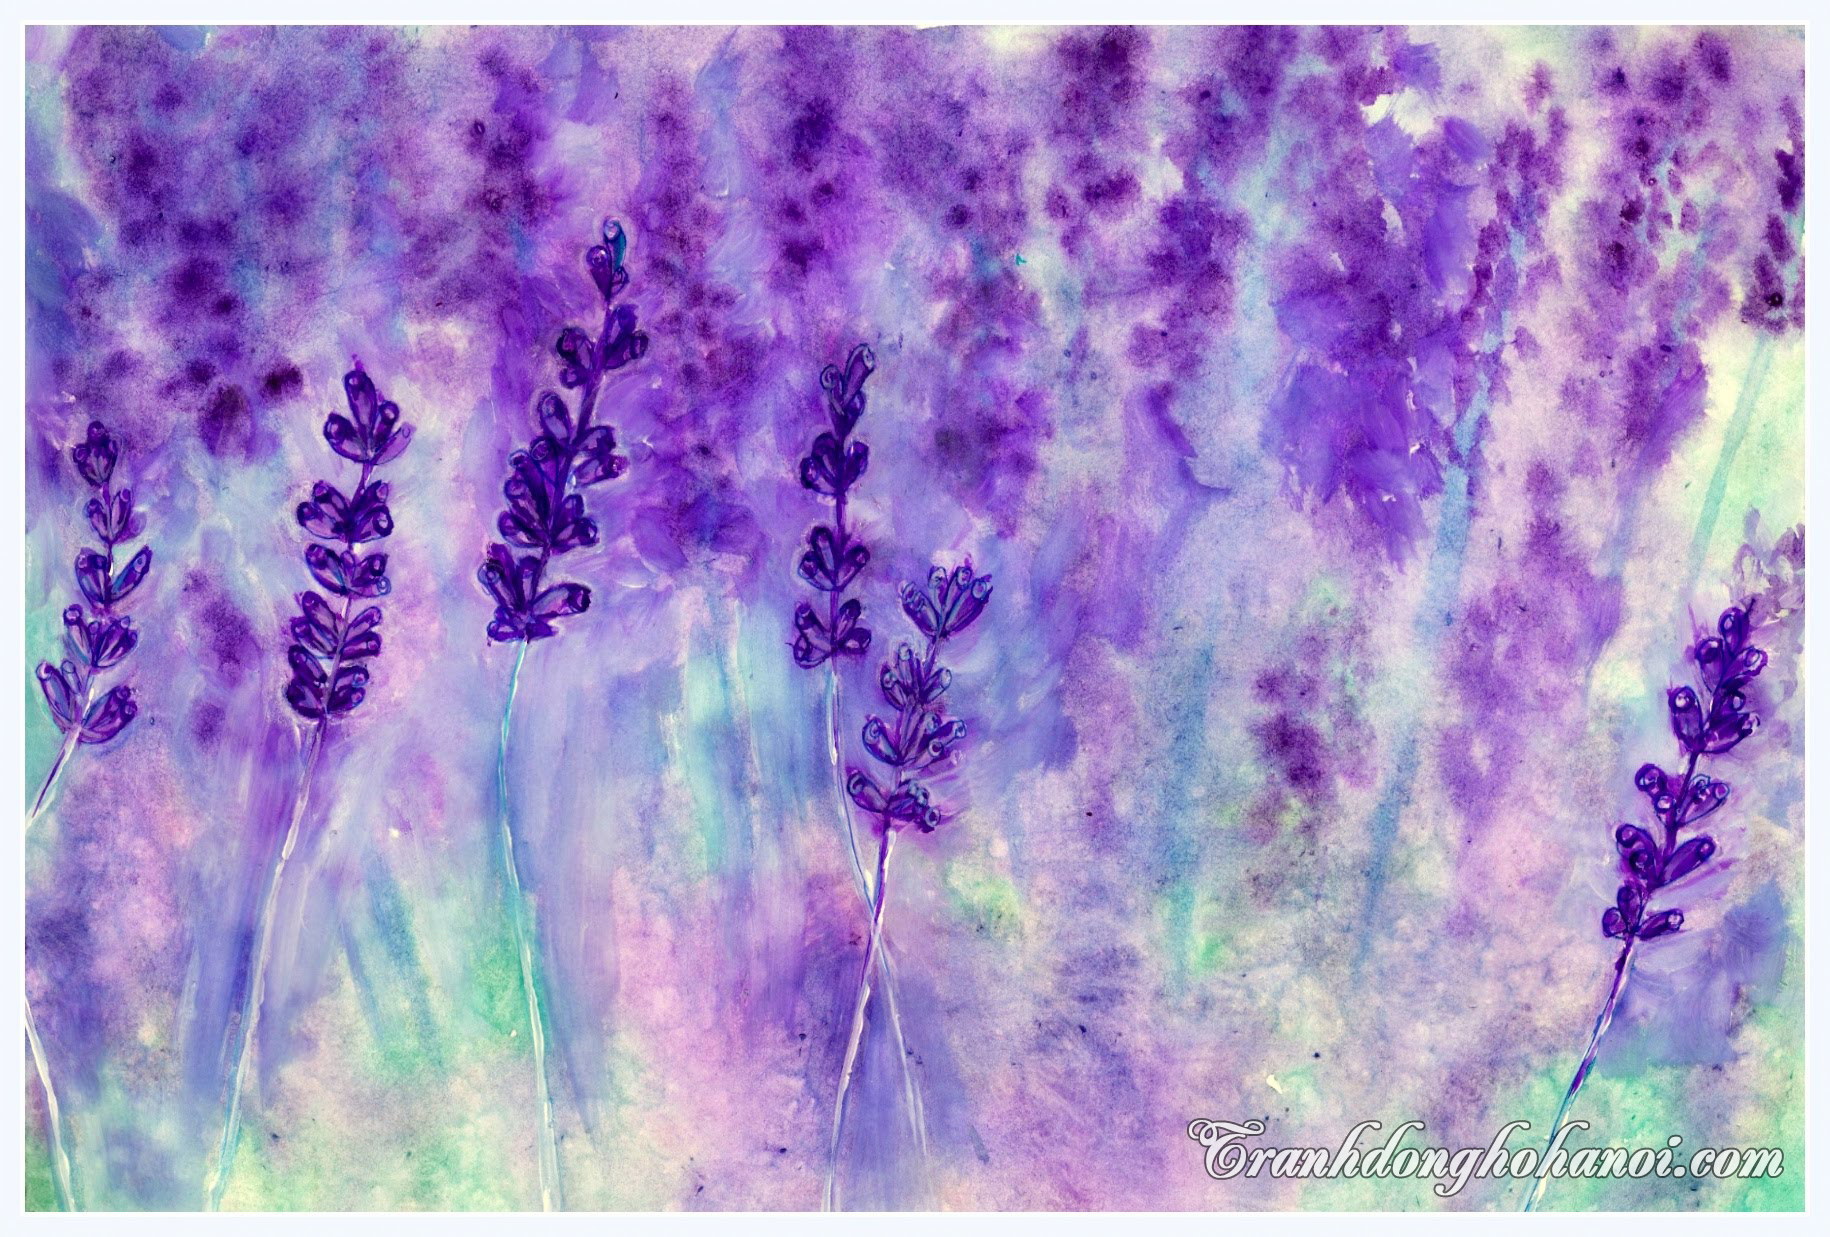 Hinh anh tranh ve hoa oai huong lavender mau tim biec tuyet dep